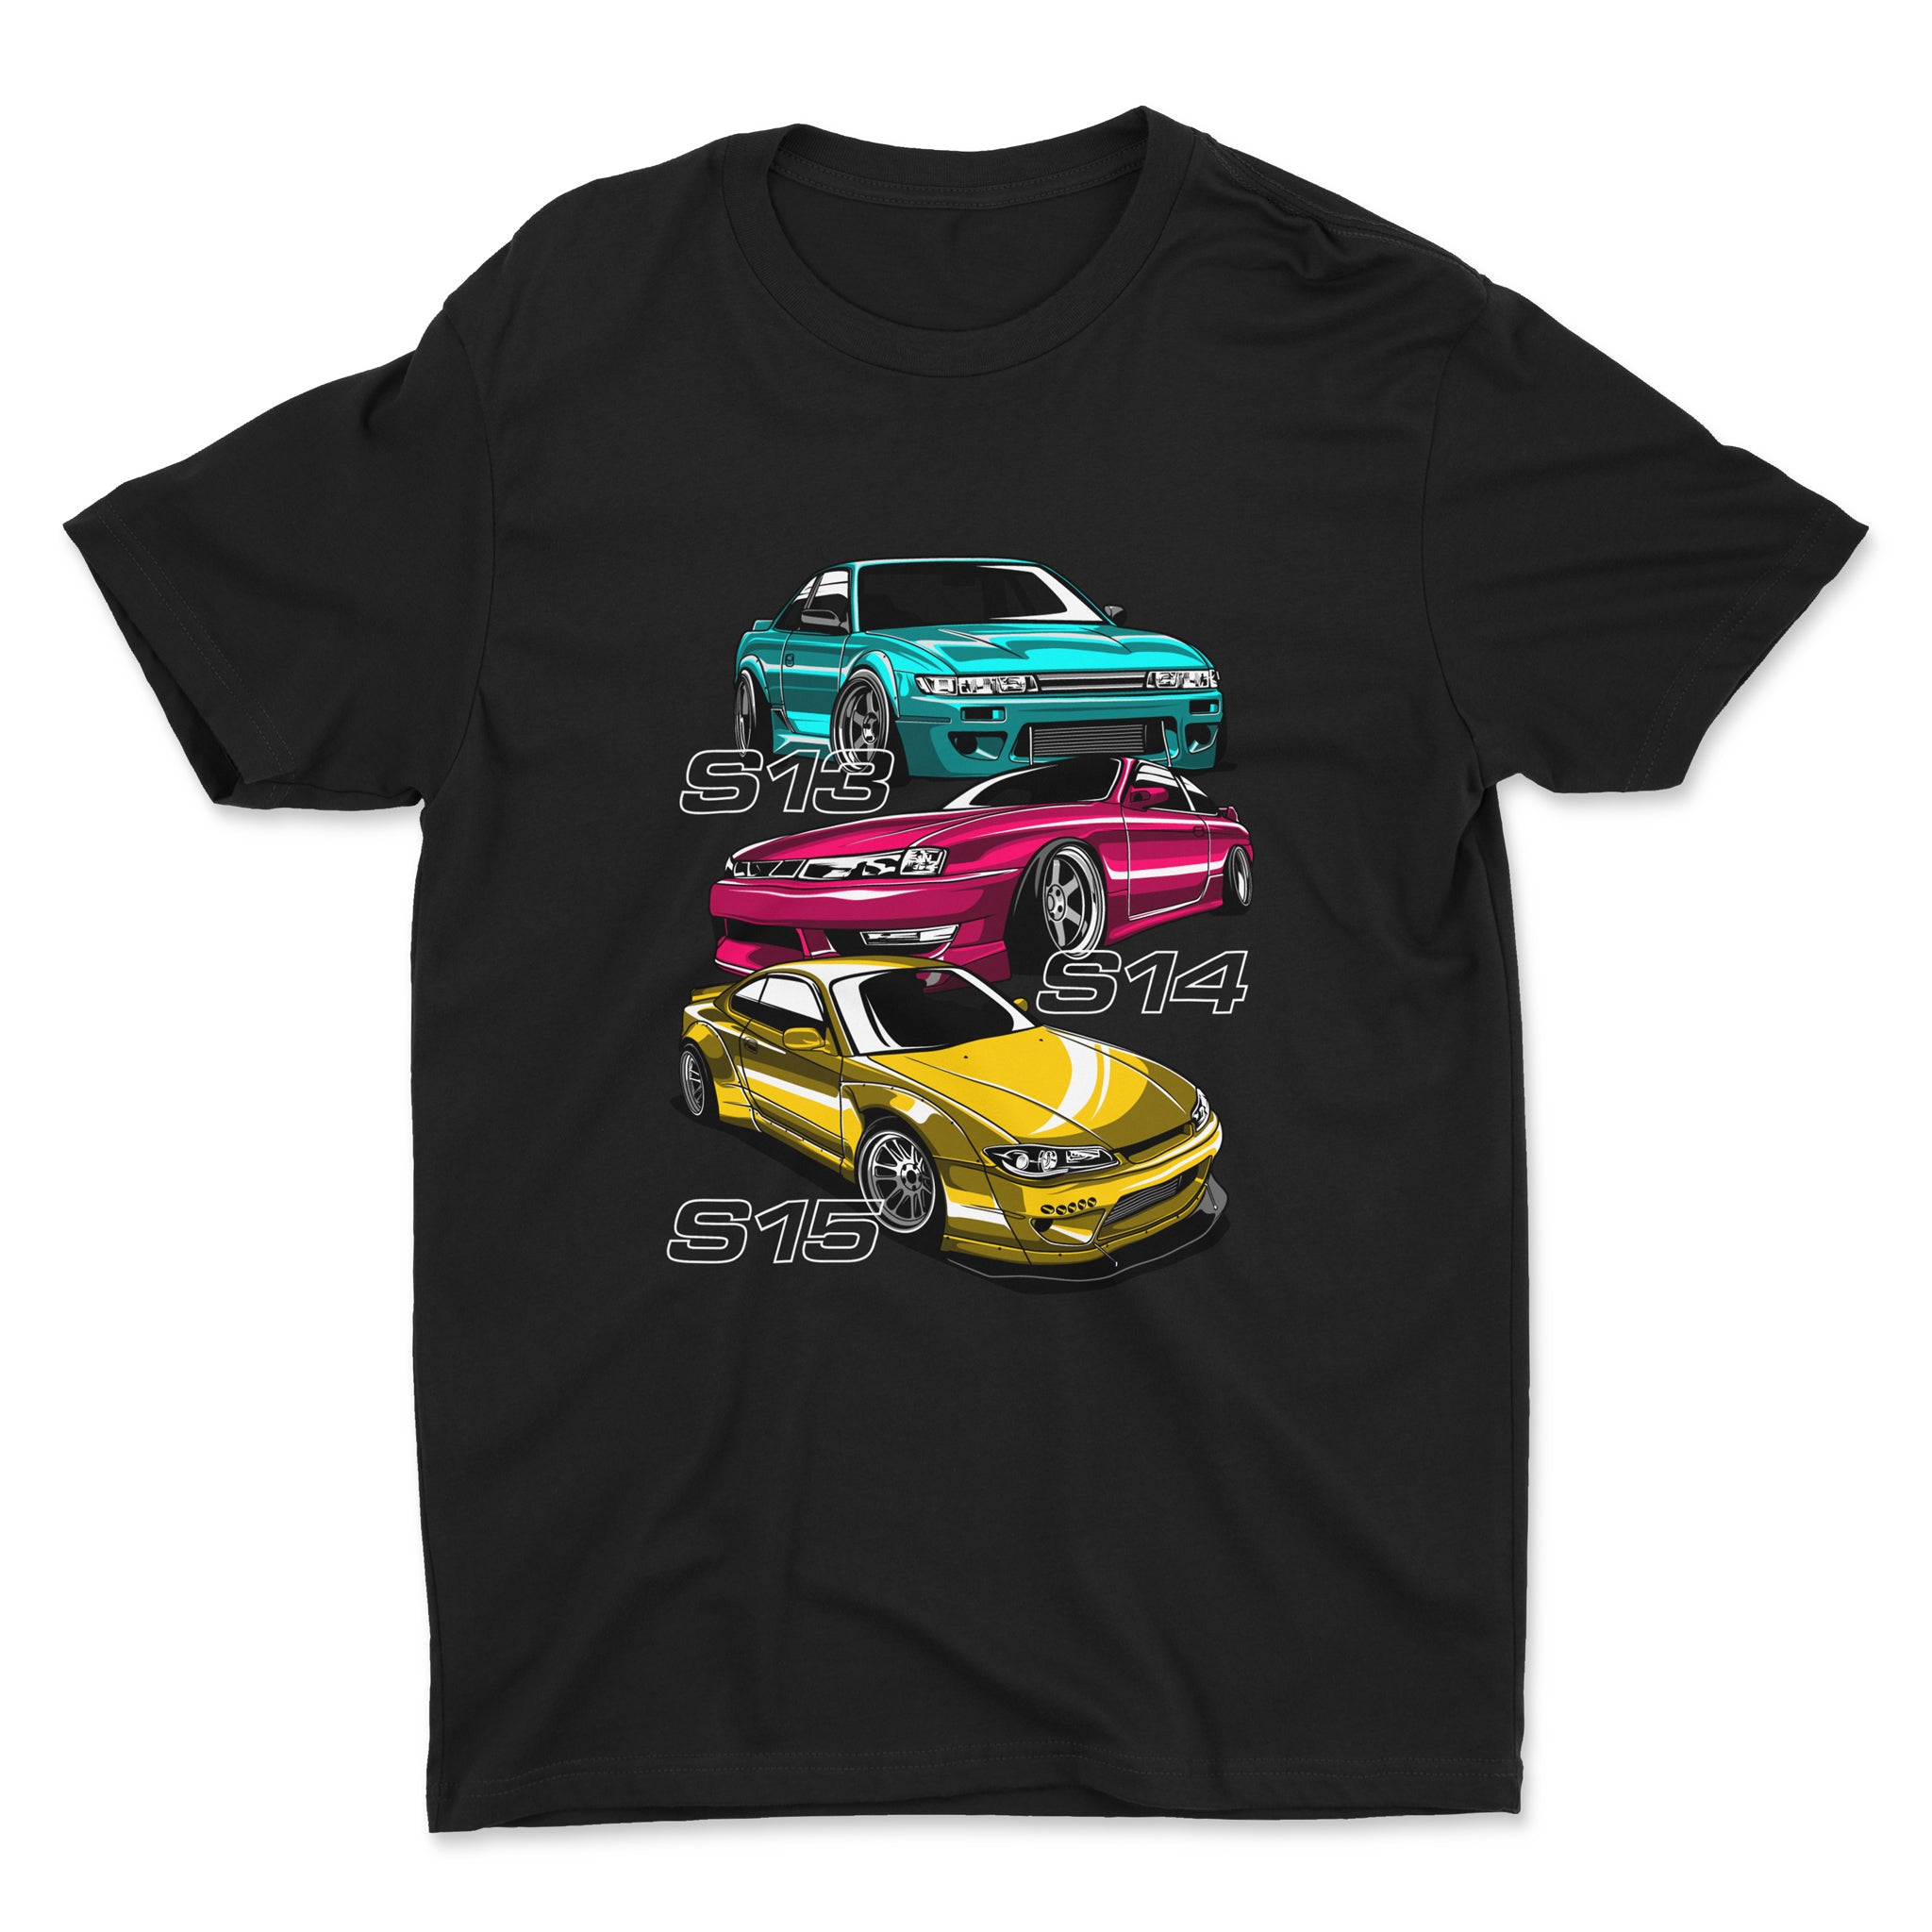 S Chassis Generation - Car T-Shirt - Black. NIssan 240sx, 200sx, 180sx, silvia s13, s14, s15.